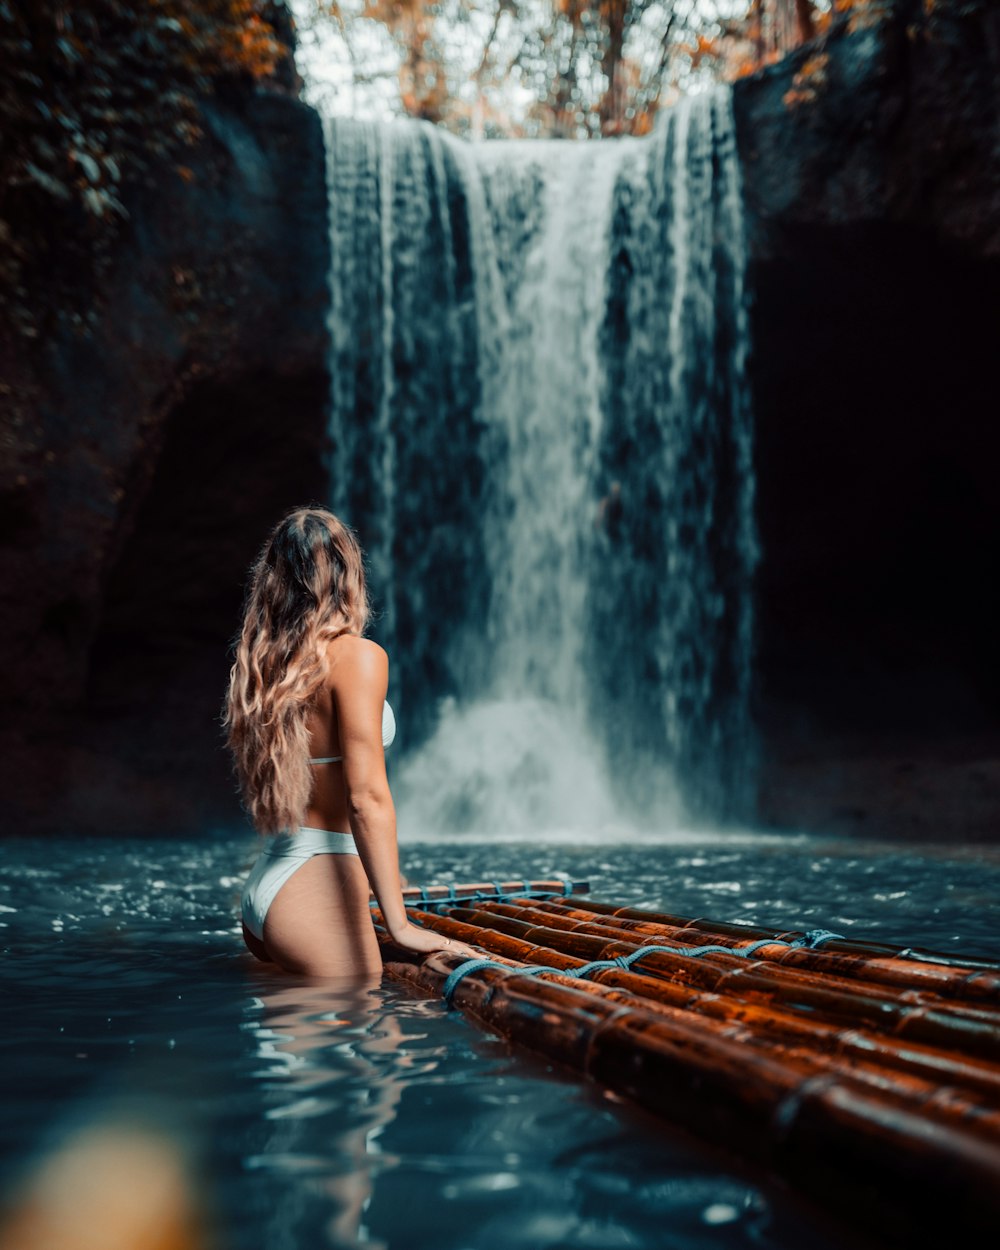 Una persona sentada junto a una cascada